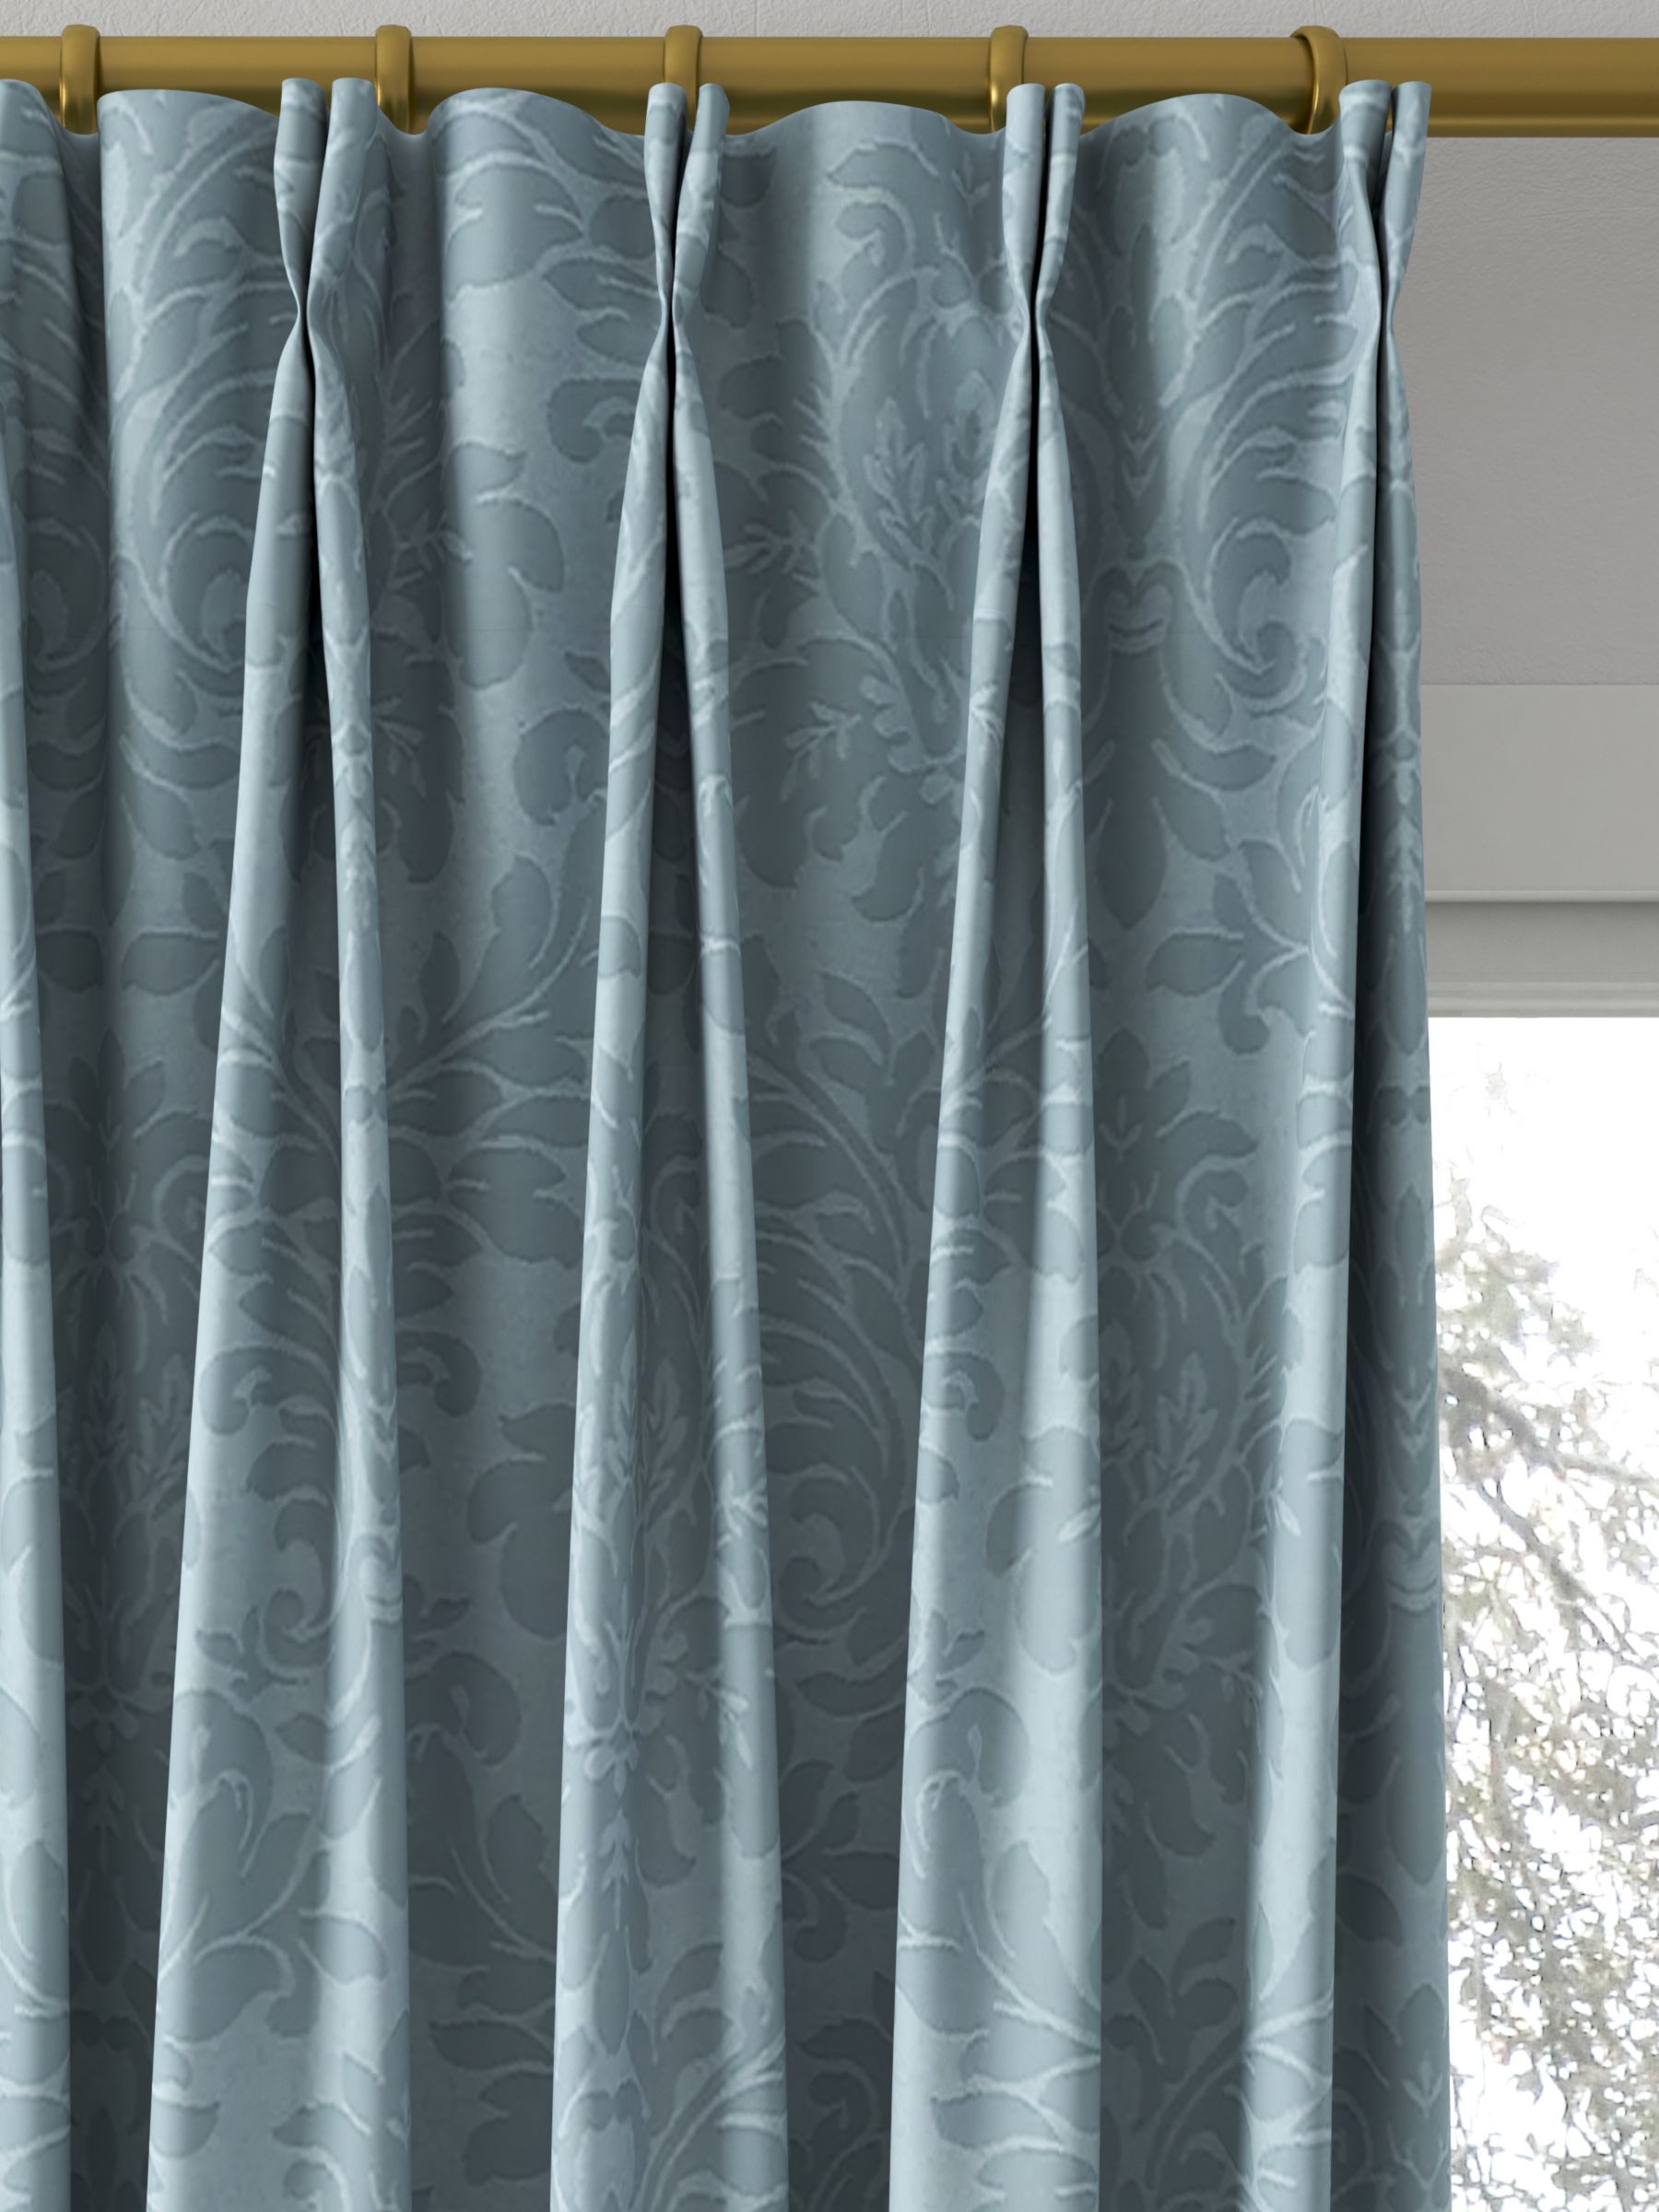 Sanderson Lymington Damask Made to Measure Curtains, Sky Blue